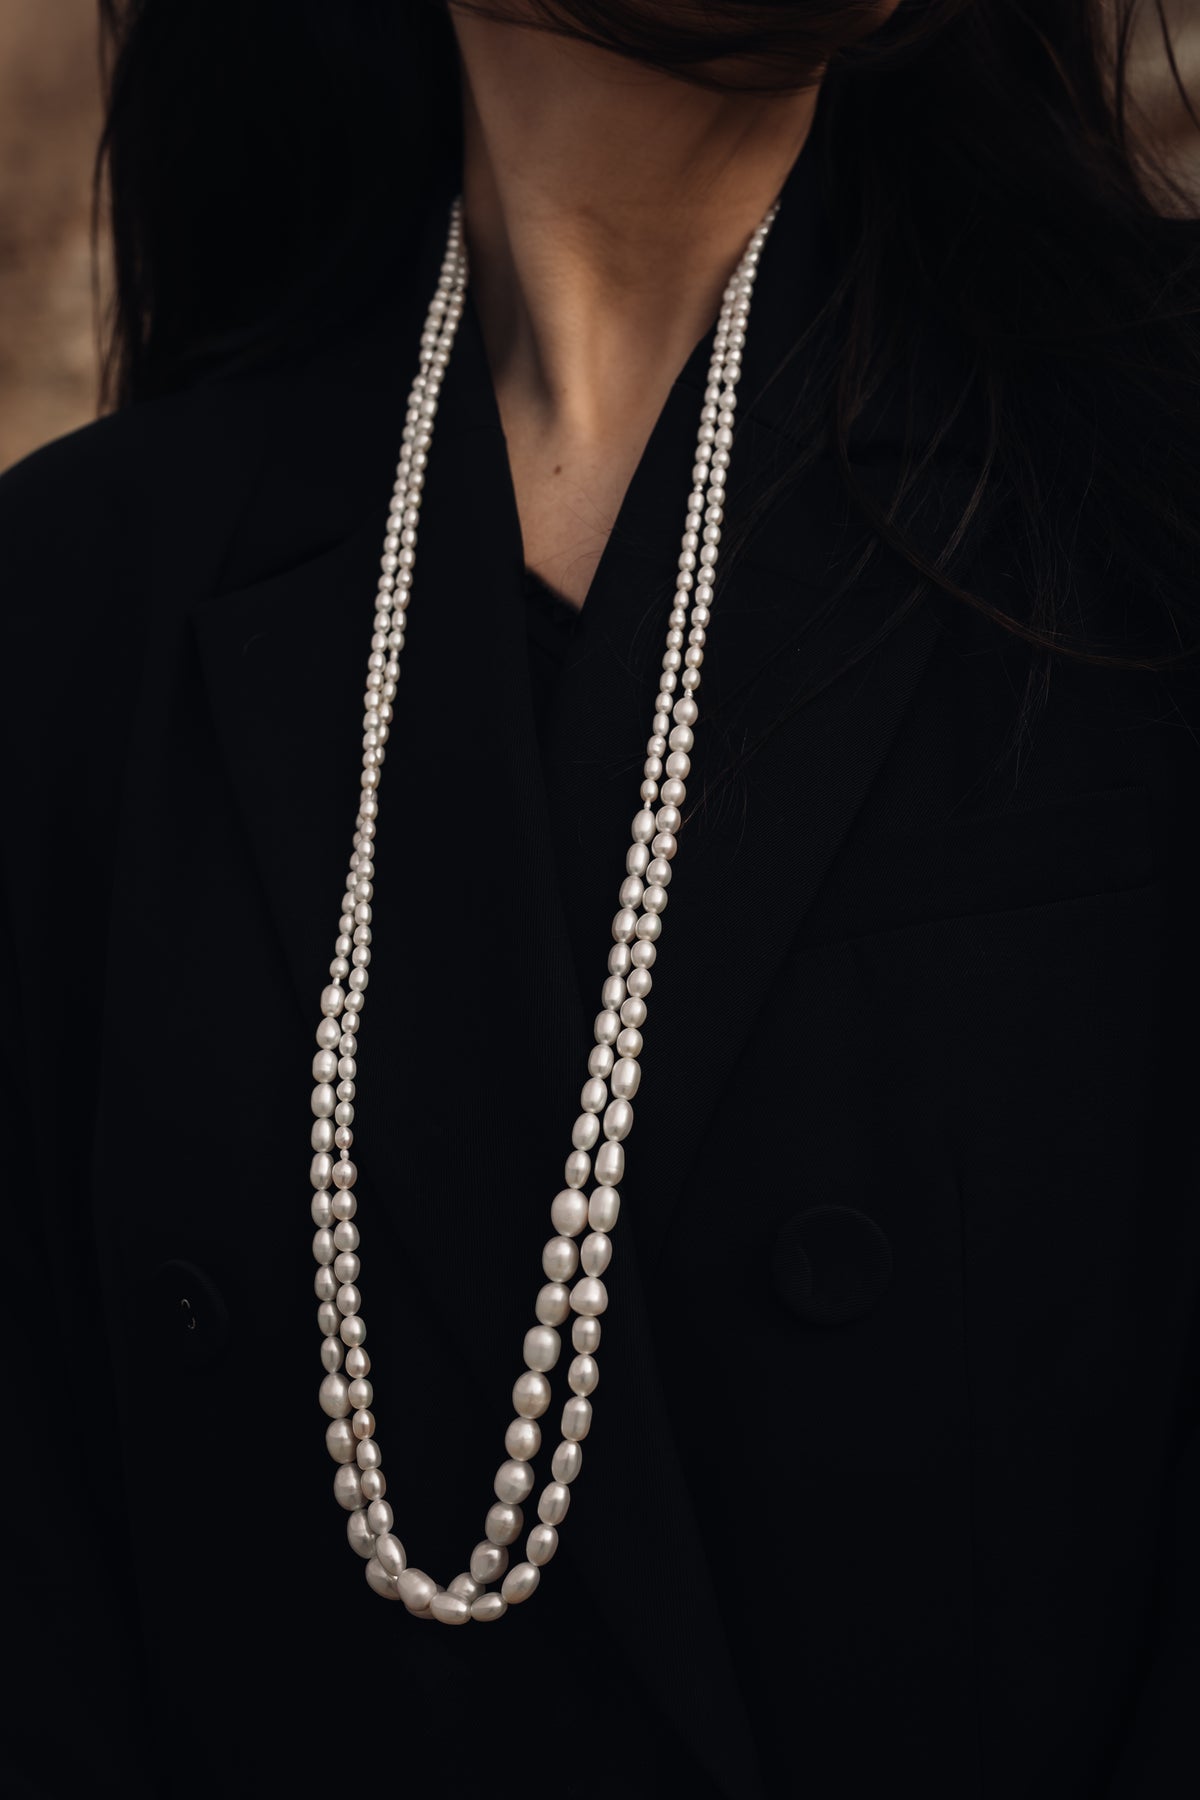 Sorelle ApS Stormy necklace Necklace